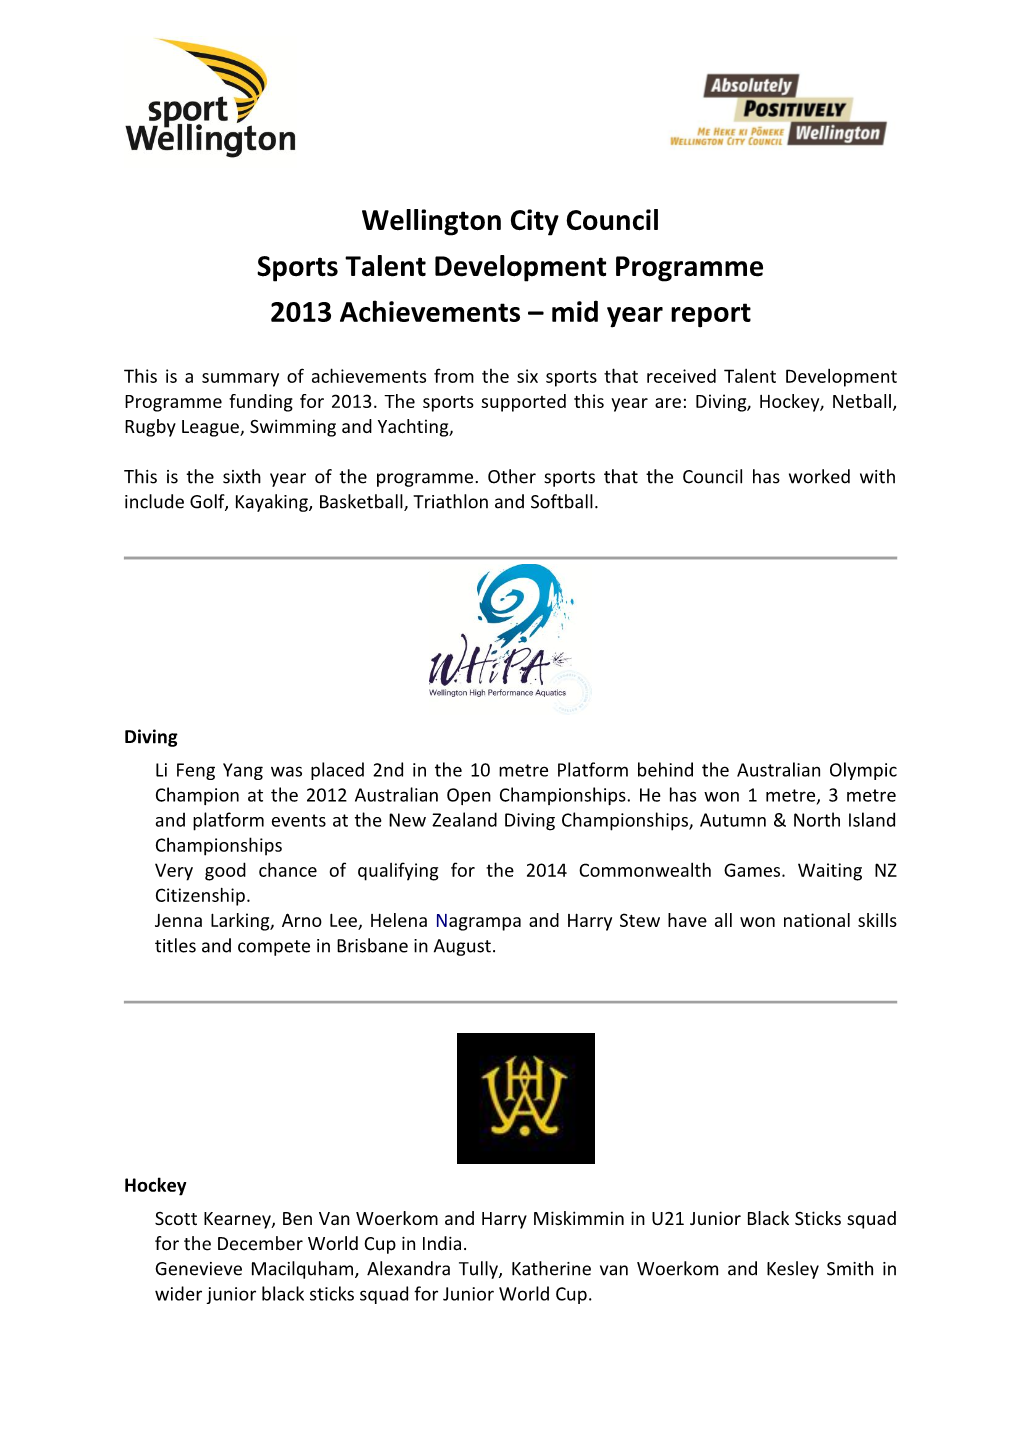 Sports Talent Development Programme 2013 Achievements – Mid Year Report